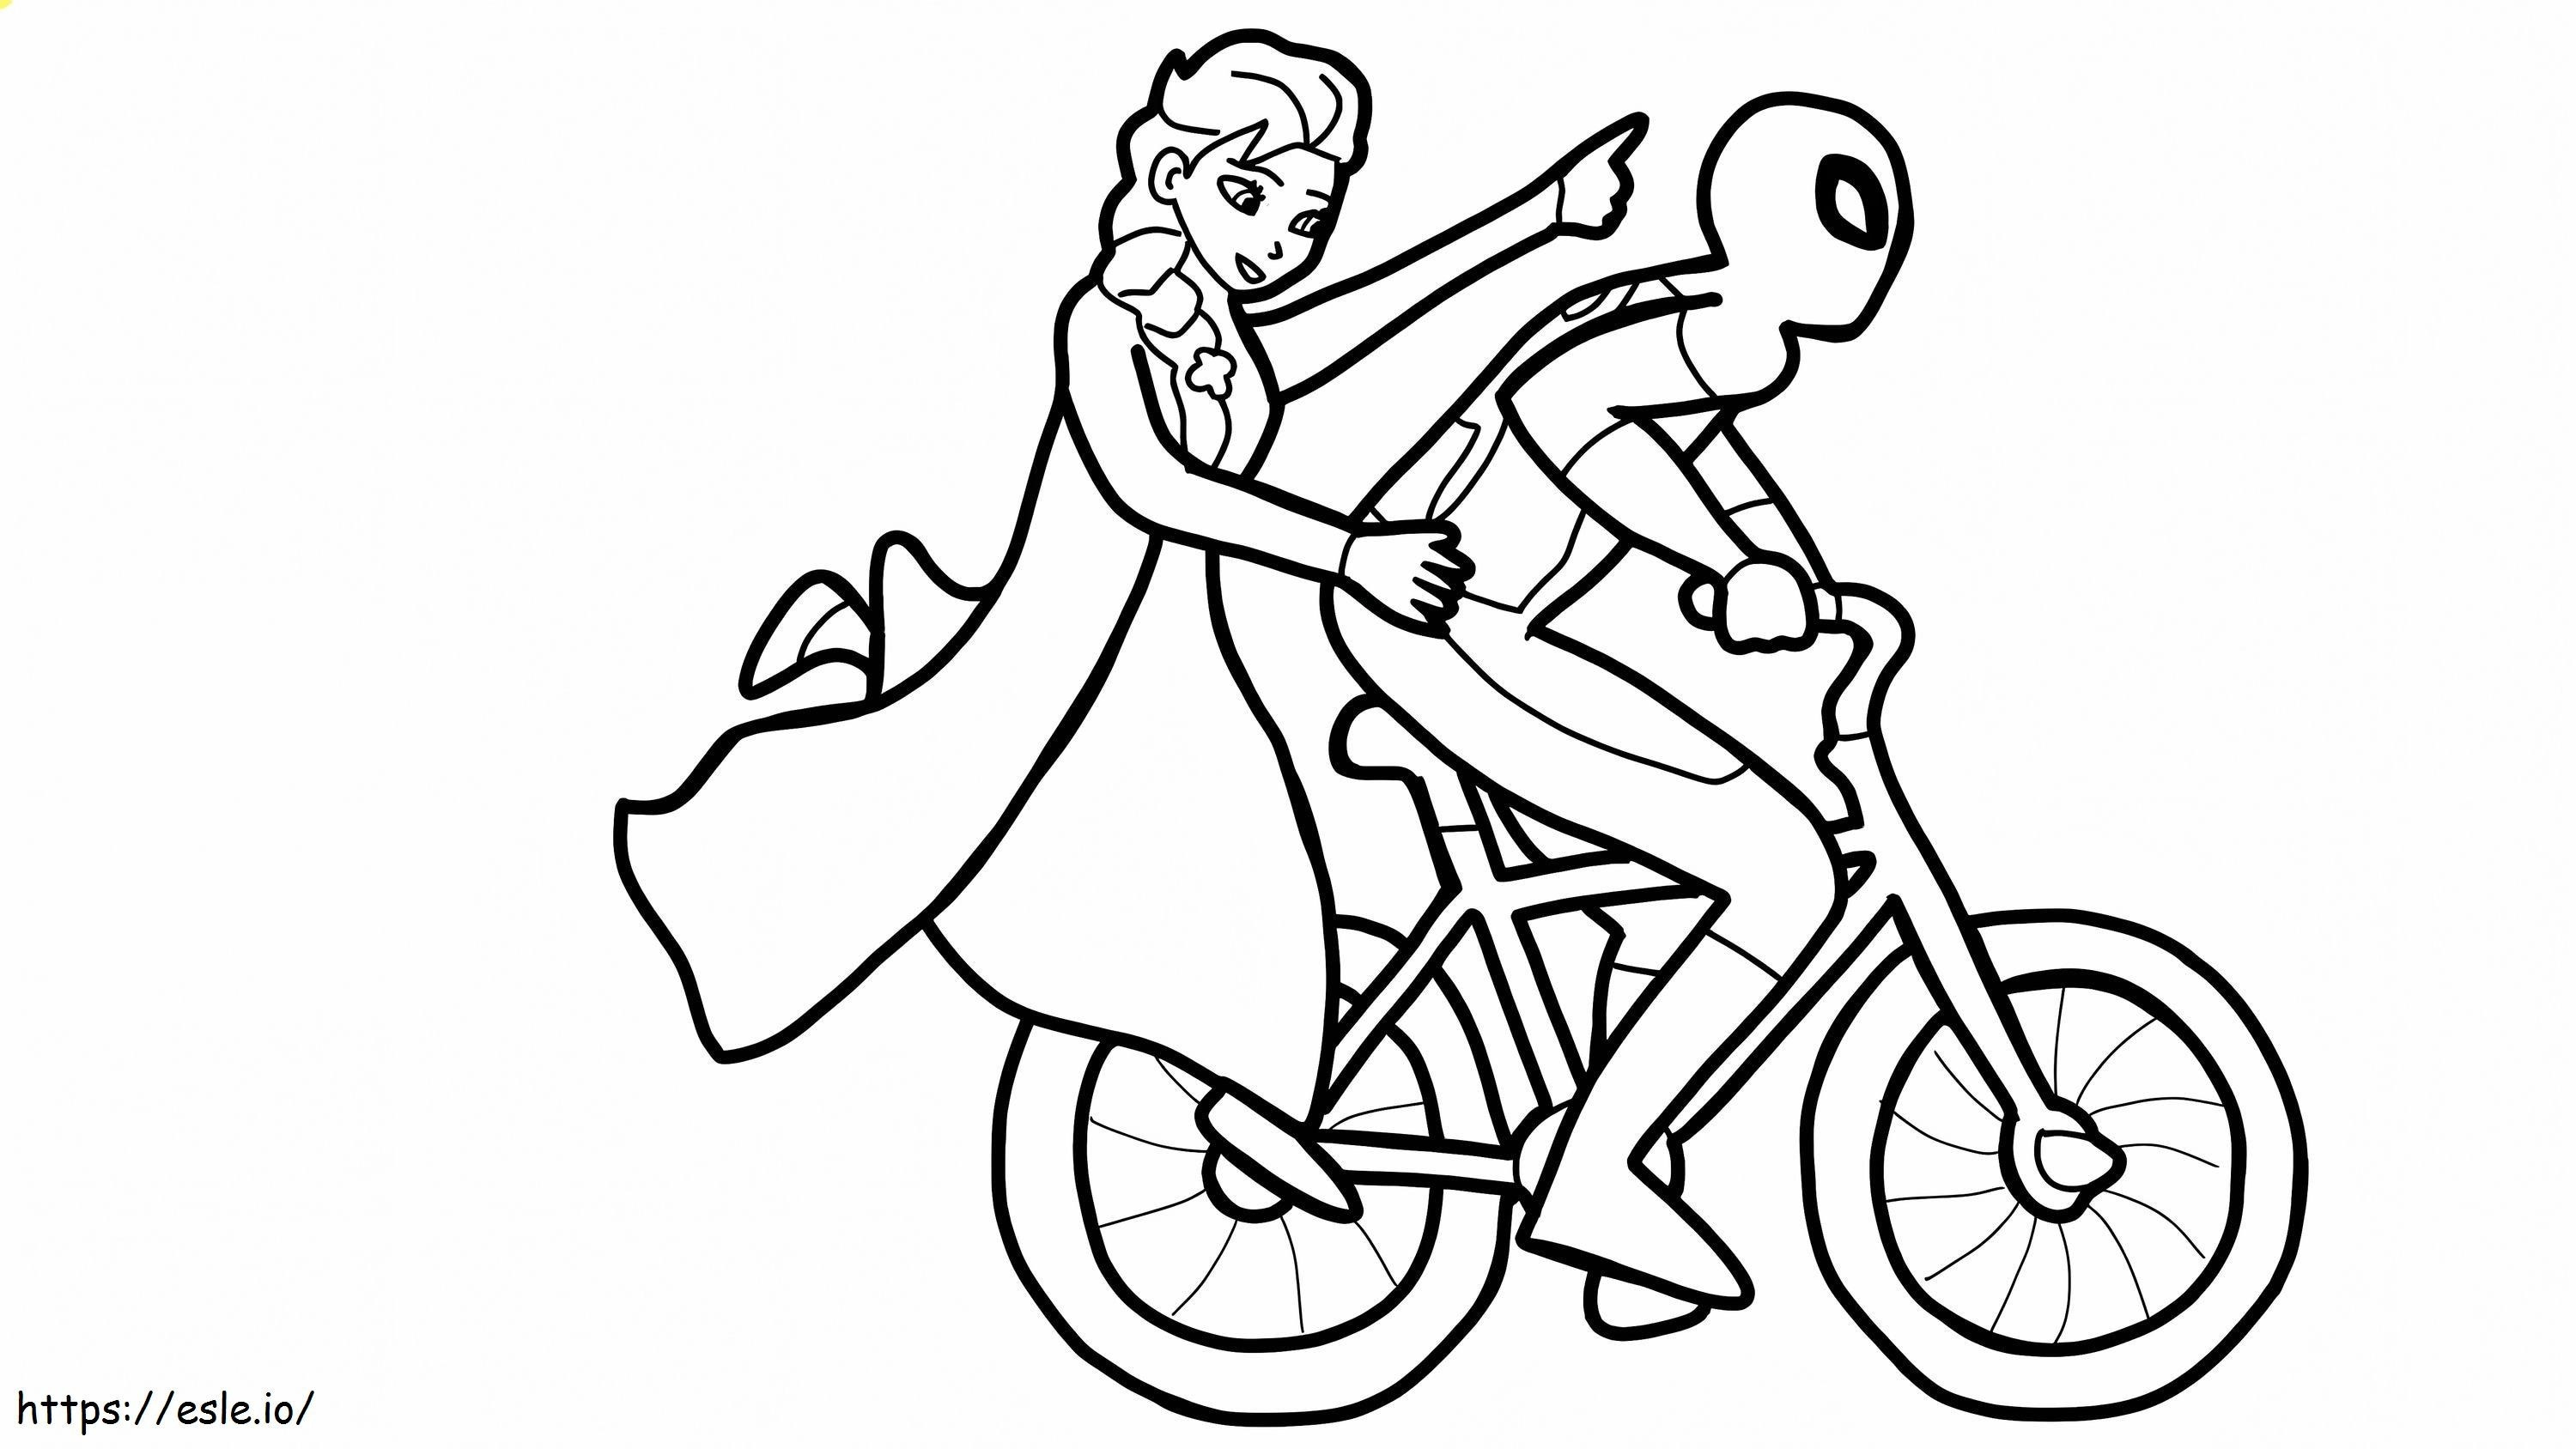 Elsa i Spider-Man na rowerze kolorowanka